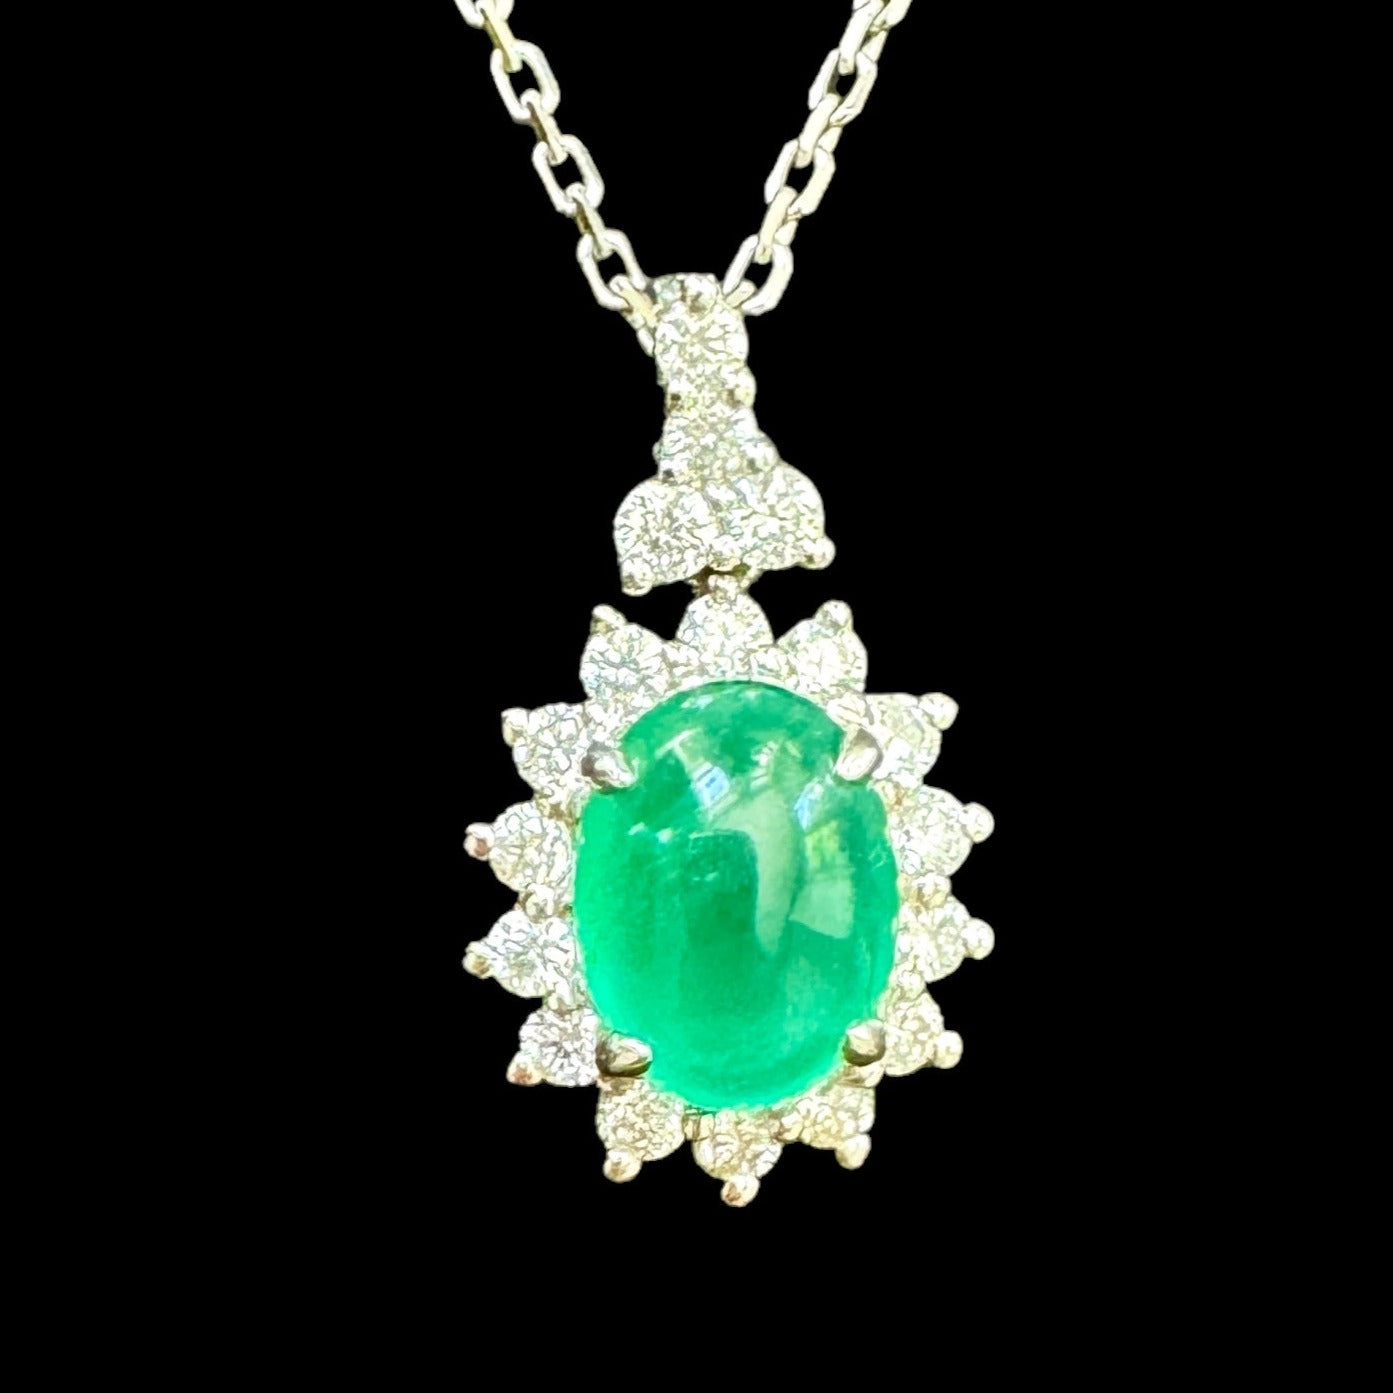 Cabochon Cut Emerald Set in 18K White Gold Pendant Necklace